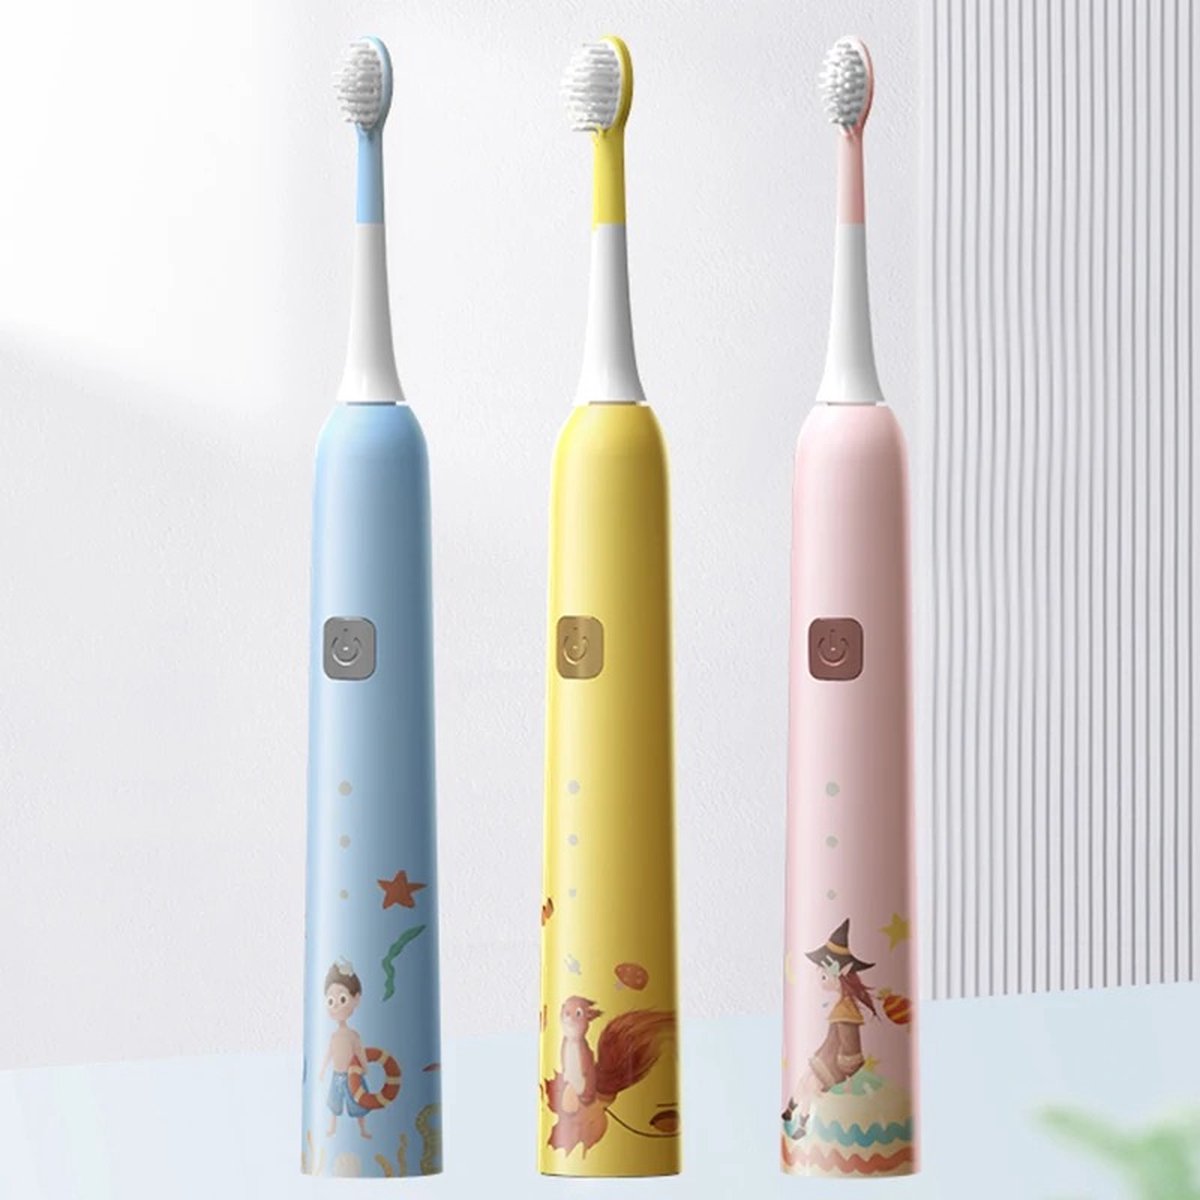 Electrische tandenborstel / roze / Kindertandenborstel / elektrisch poetsen / elektrische kindertandenborstel